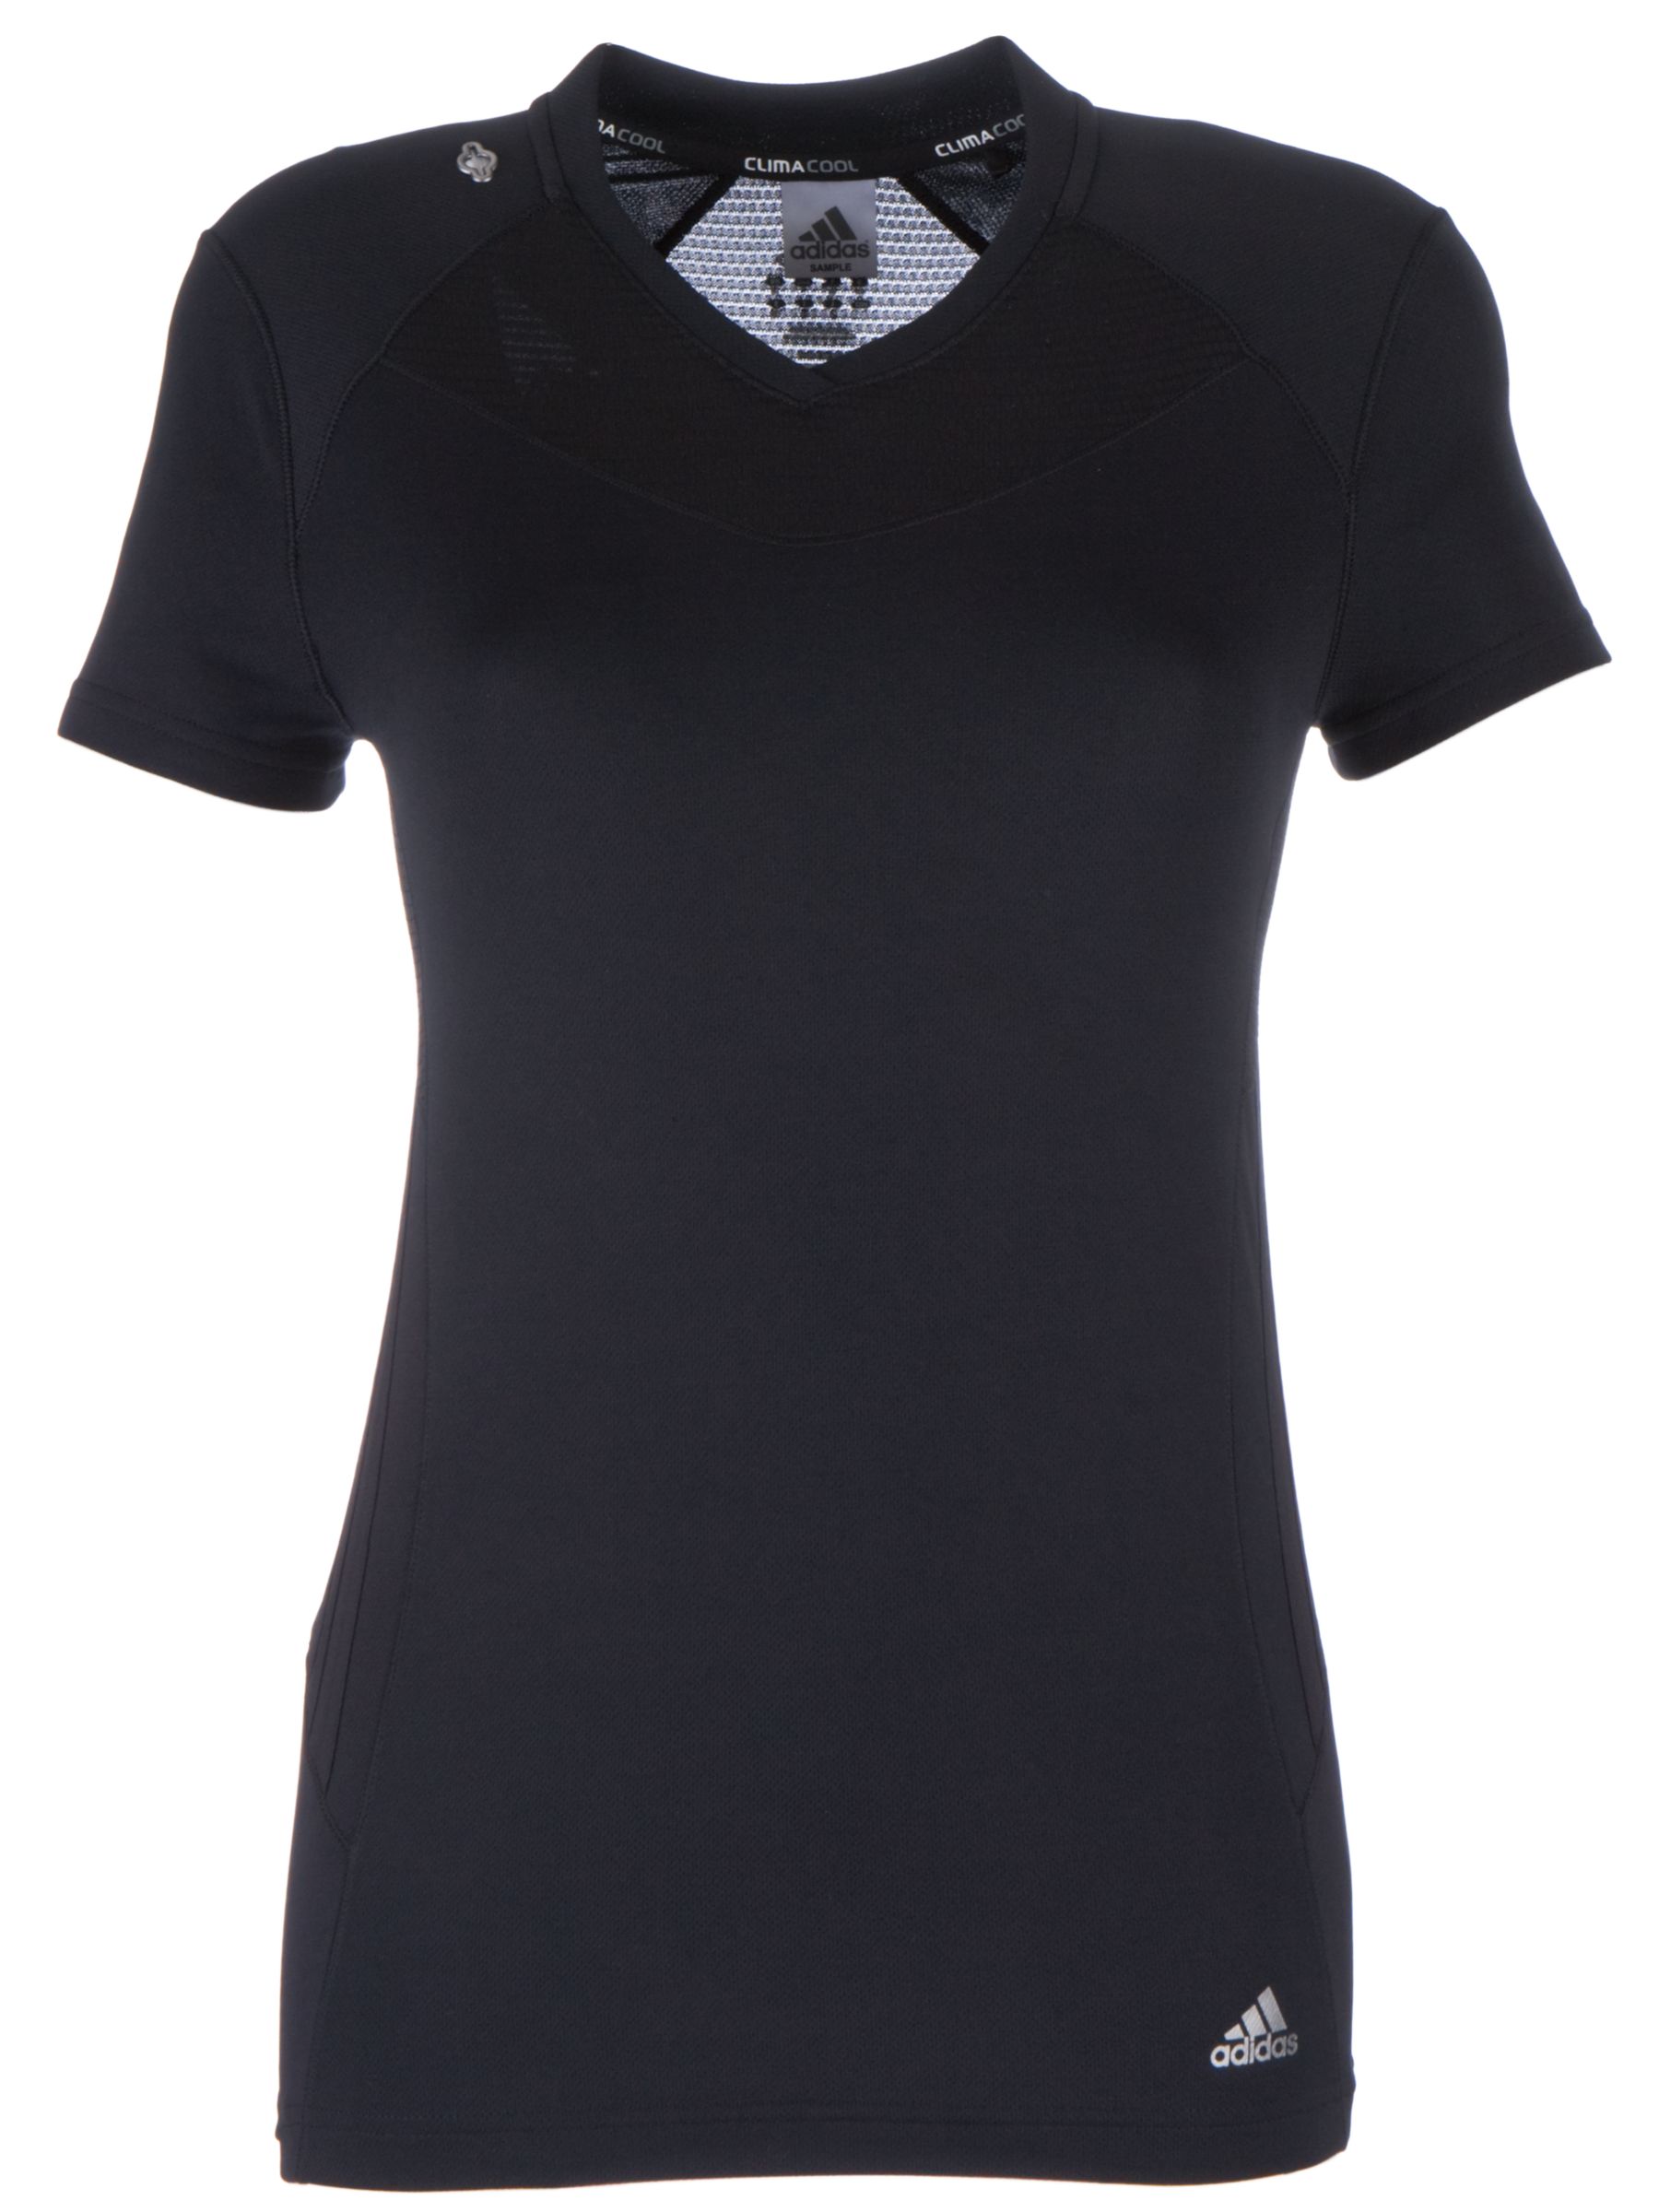 Adidas Supernova Short Sleeve T-Shirt, Black